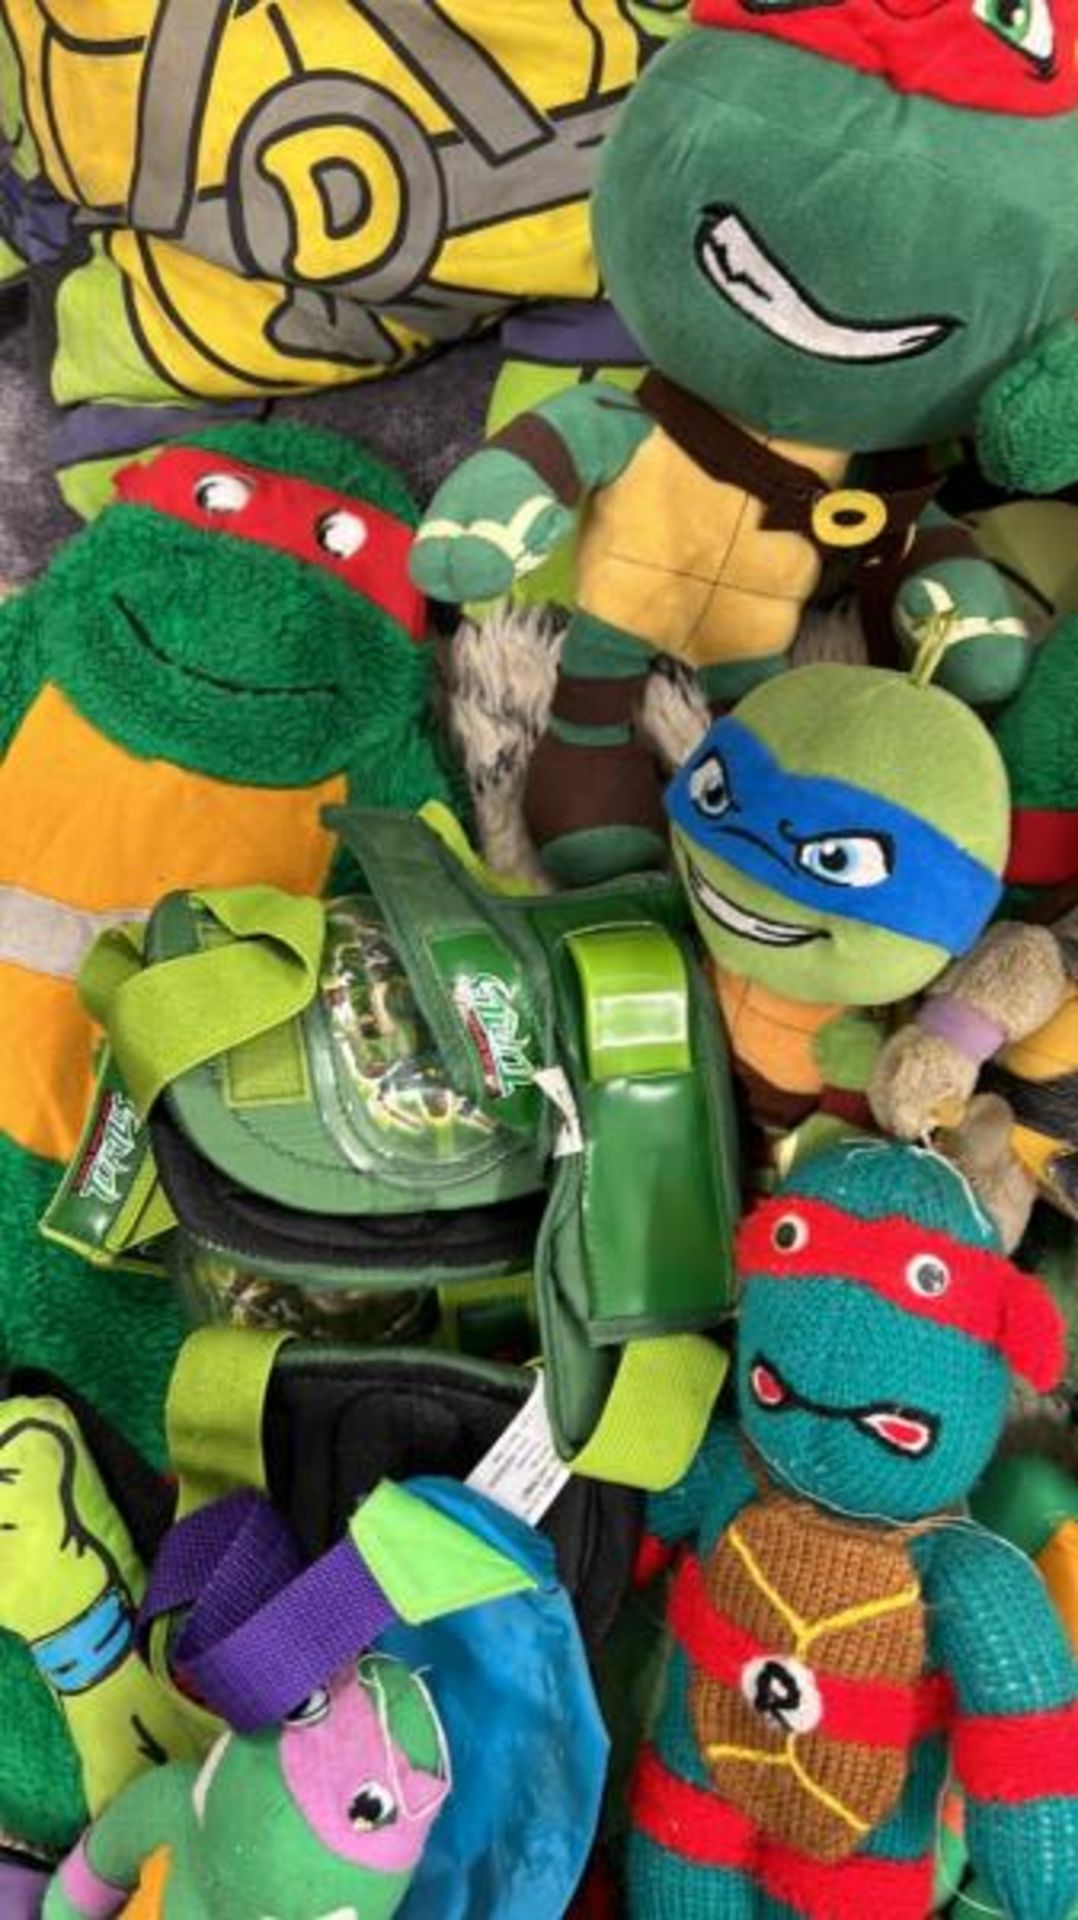 Teenage Mutant Hero Turtles soft toys, rug, rucksacks, bags and hot water bottles / AN41 - Image 7 of 8